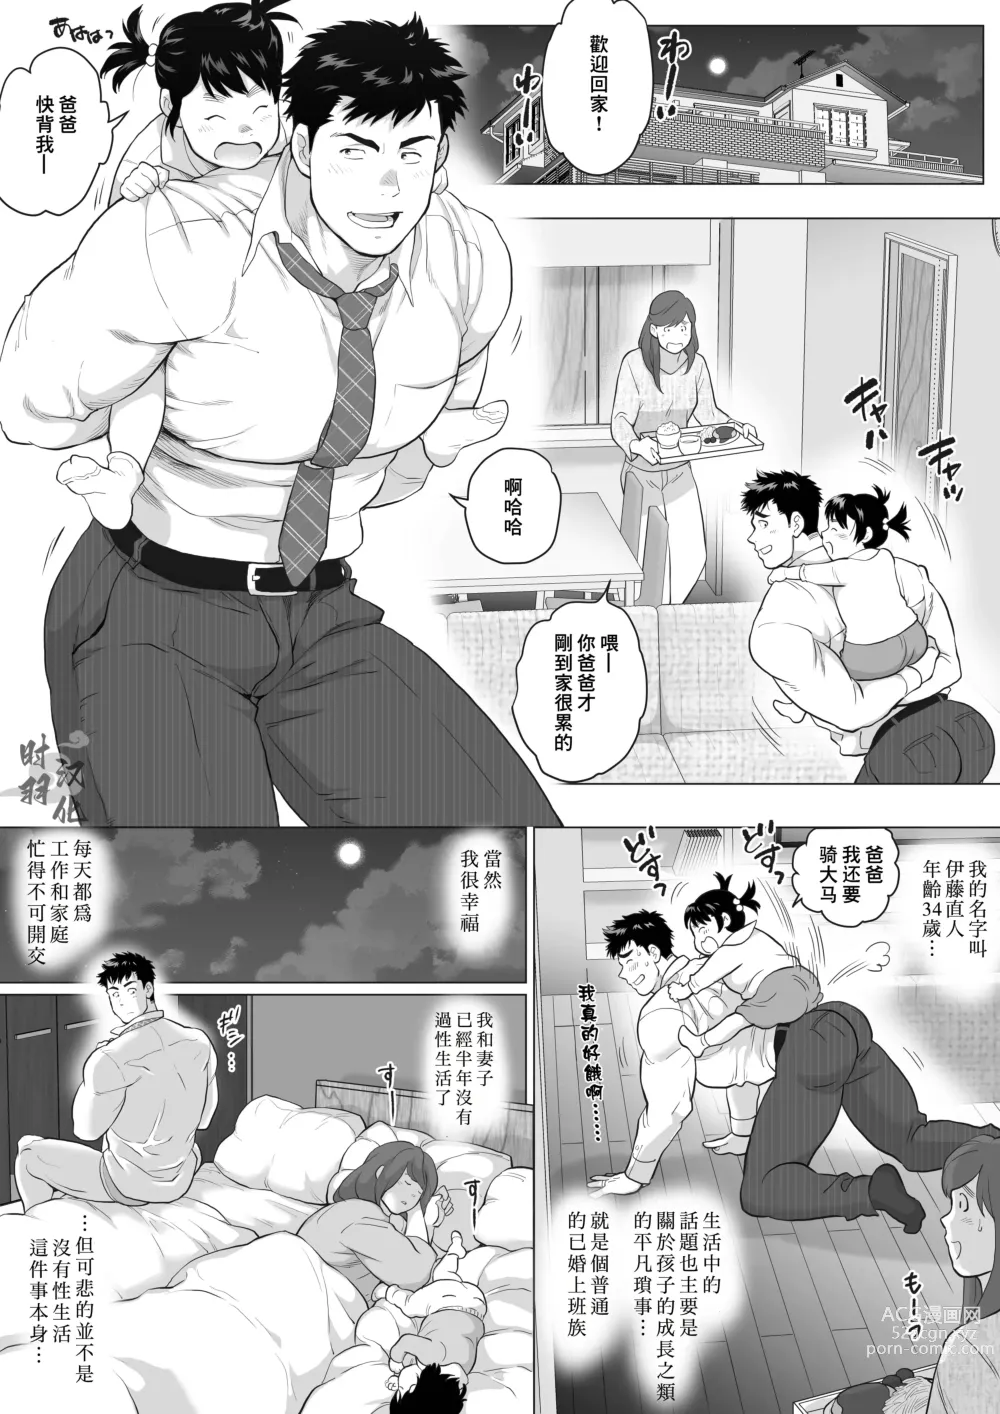 Page 2 of manga 直人爸爸与友幸爸爸 第一话